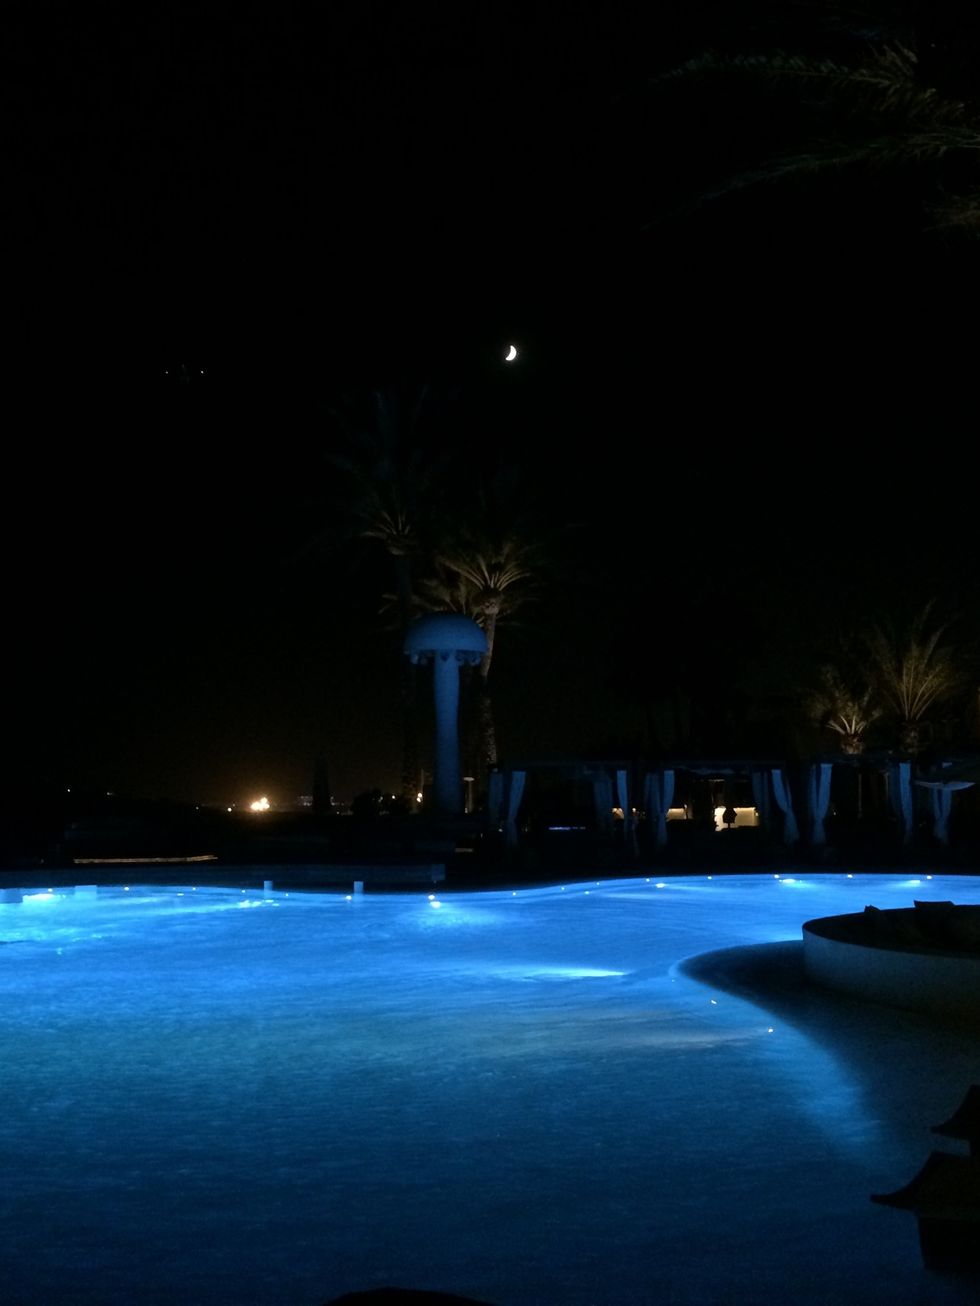 Night, Darkness, Midnight, Arecales, Resort, Landscape lighting, Resort town, Palm tree, Hotel, Swimming pool, 